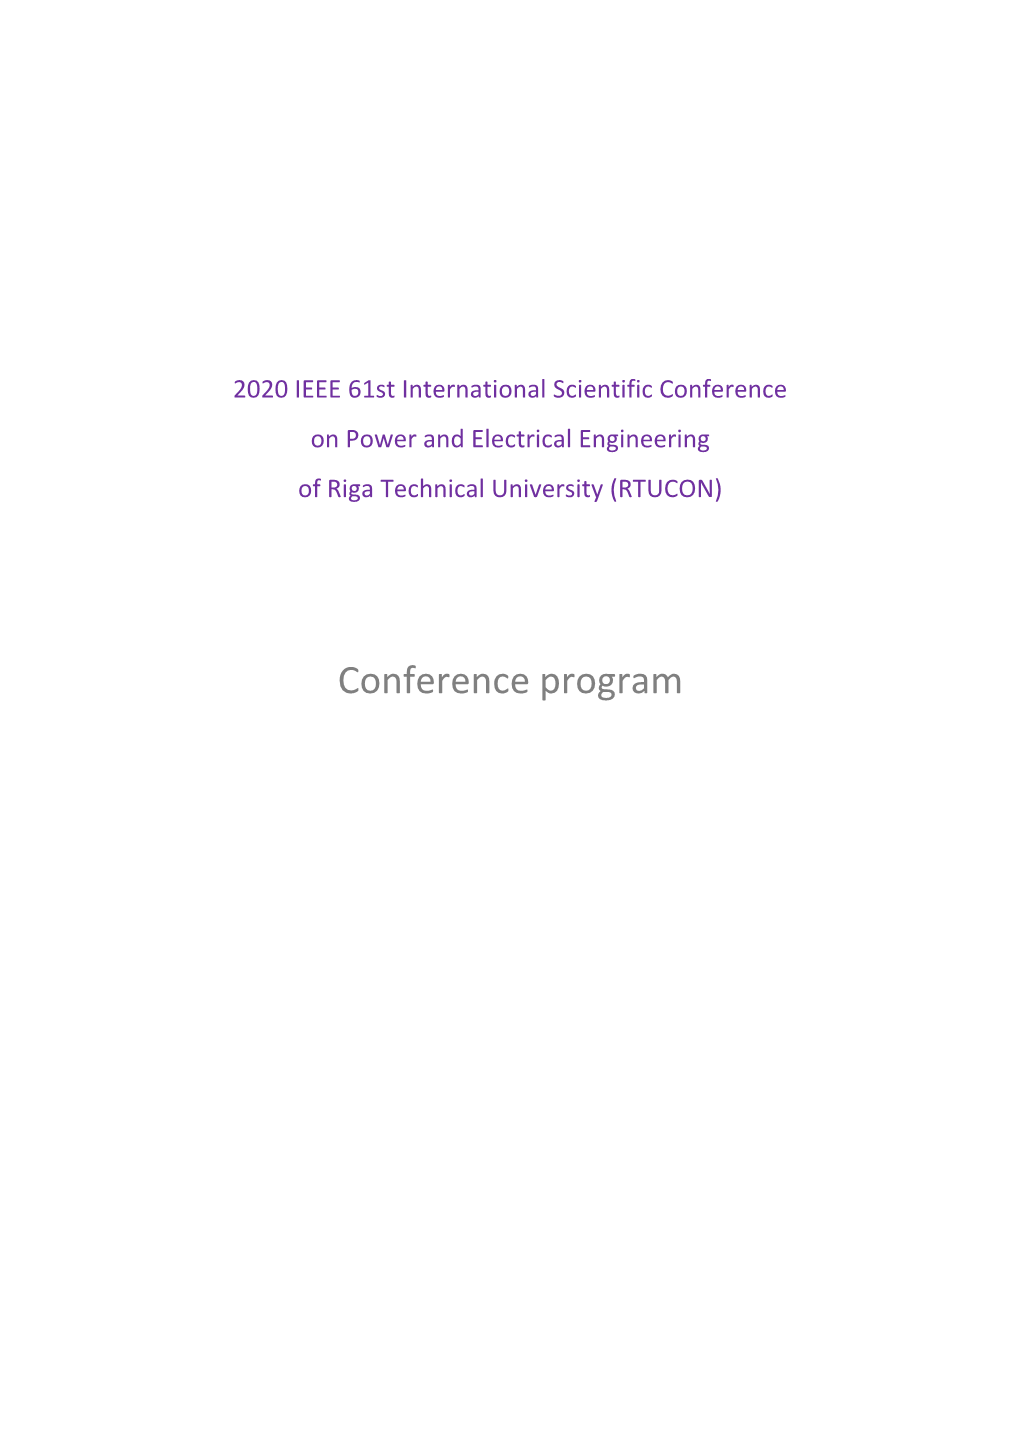 Conference Program 2